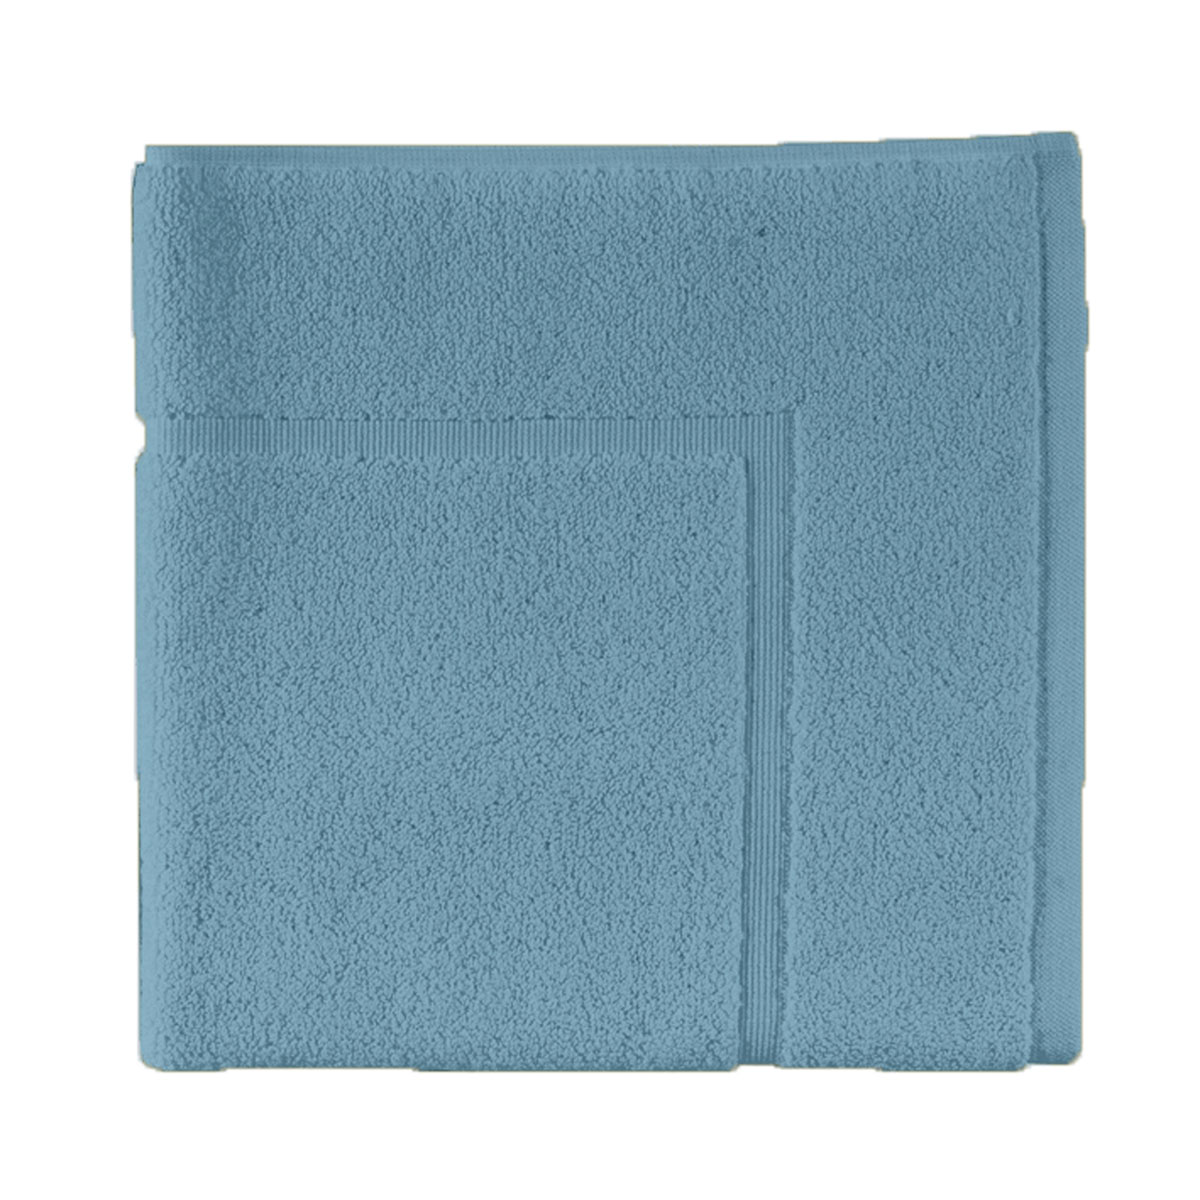 Tapis de bain uni en coton bleu Baltique 60x60